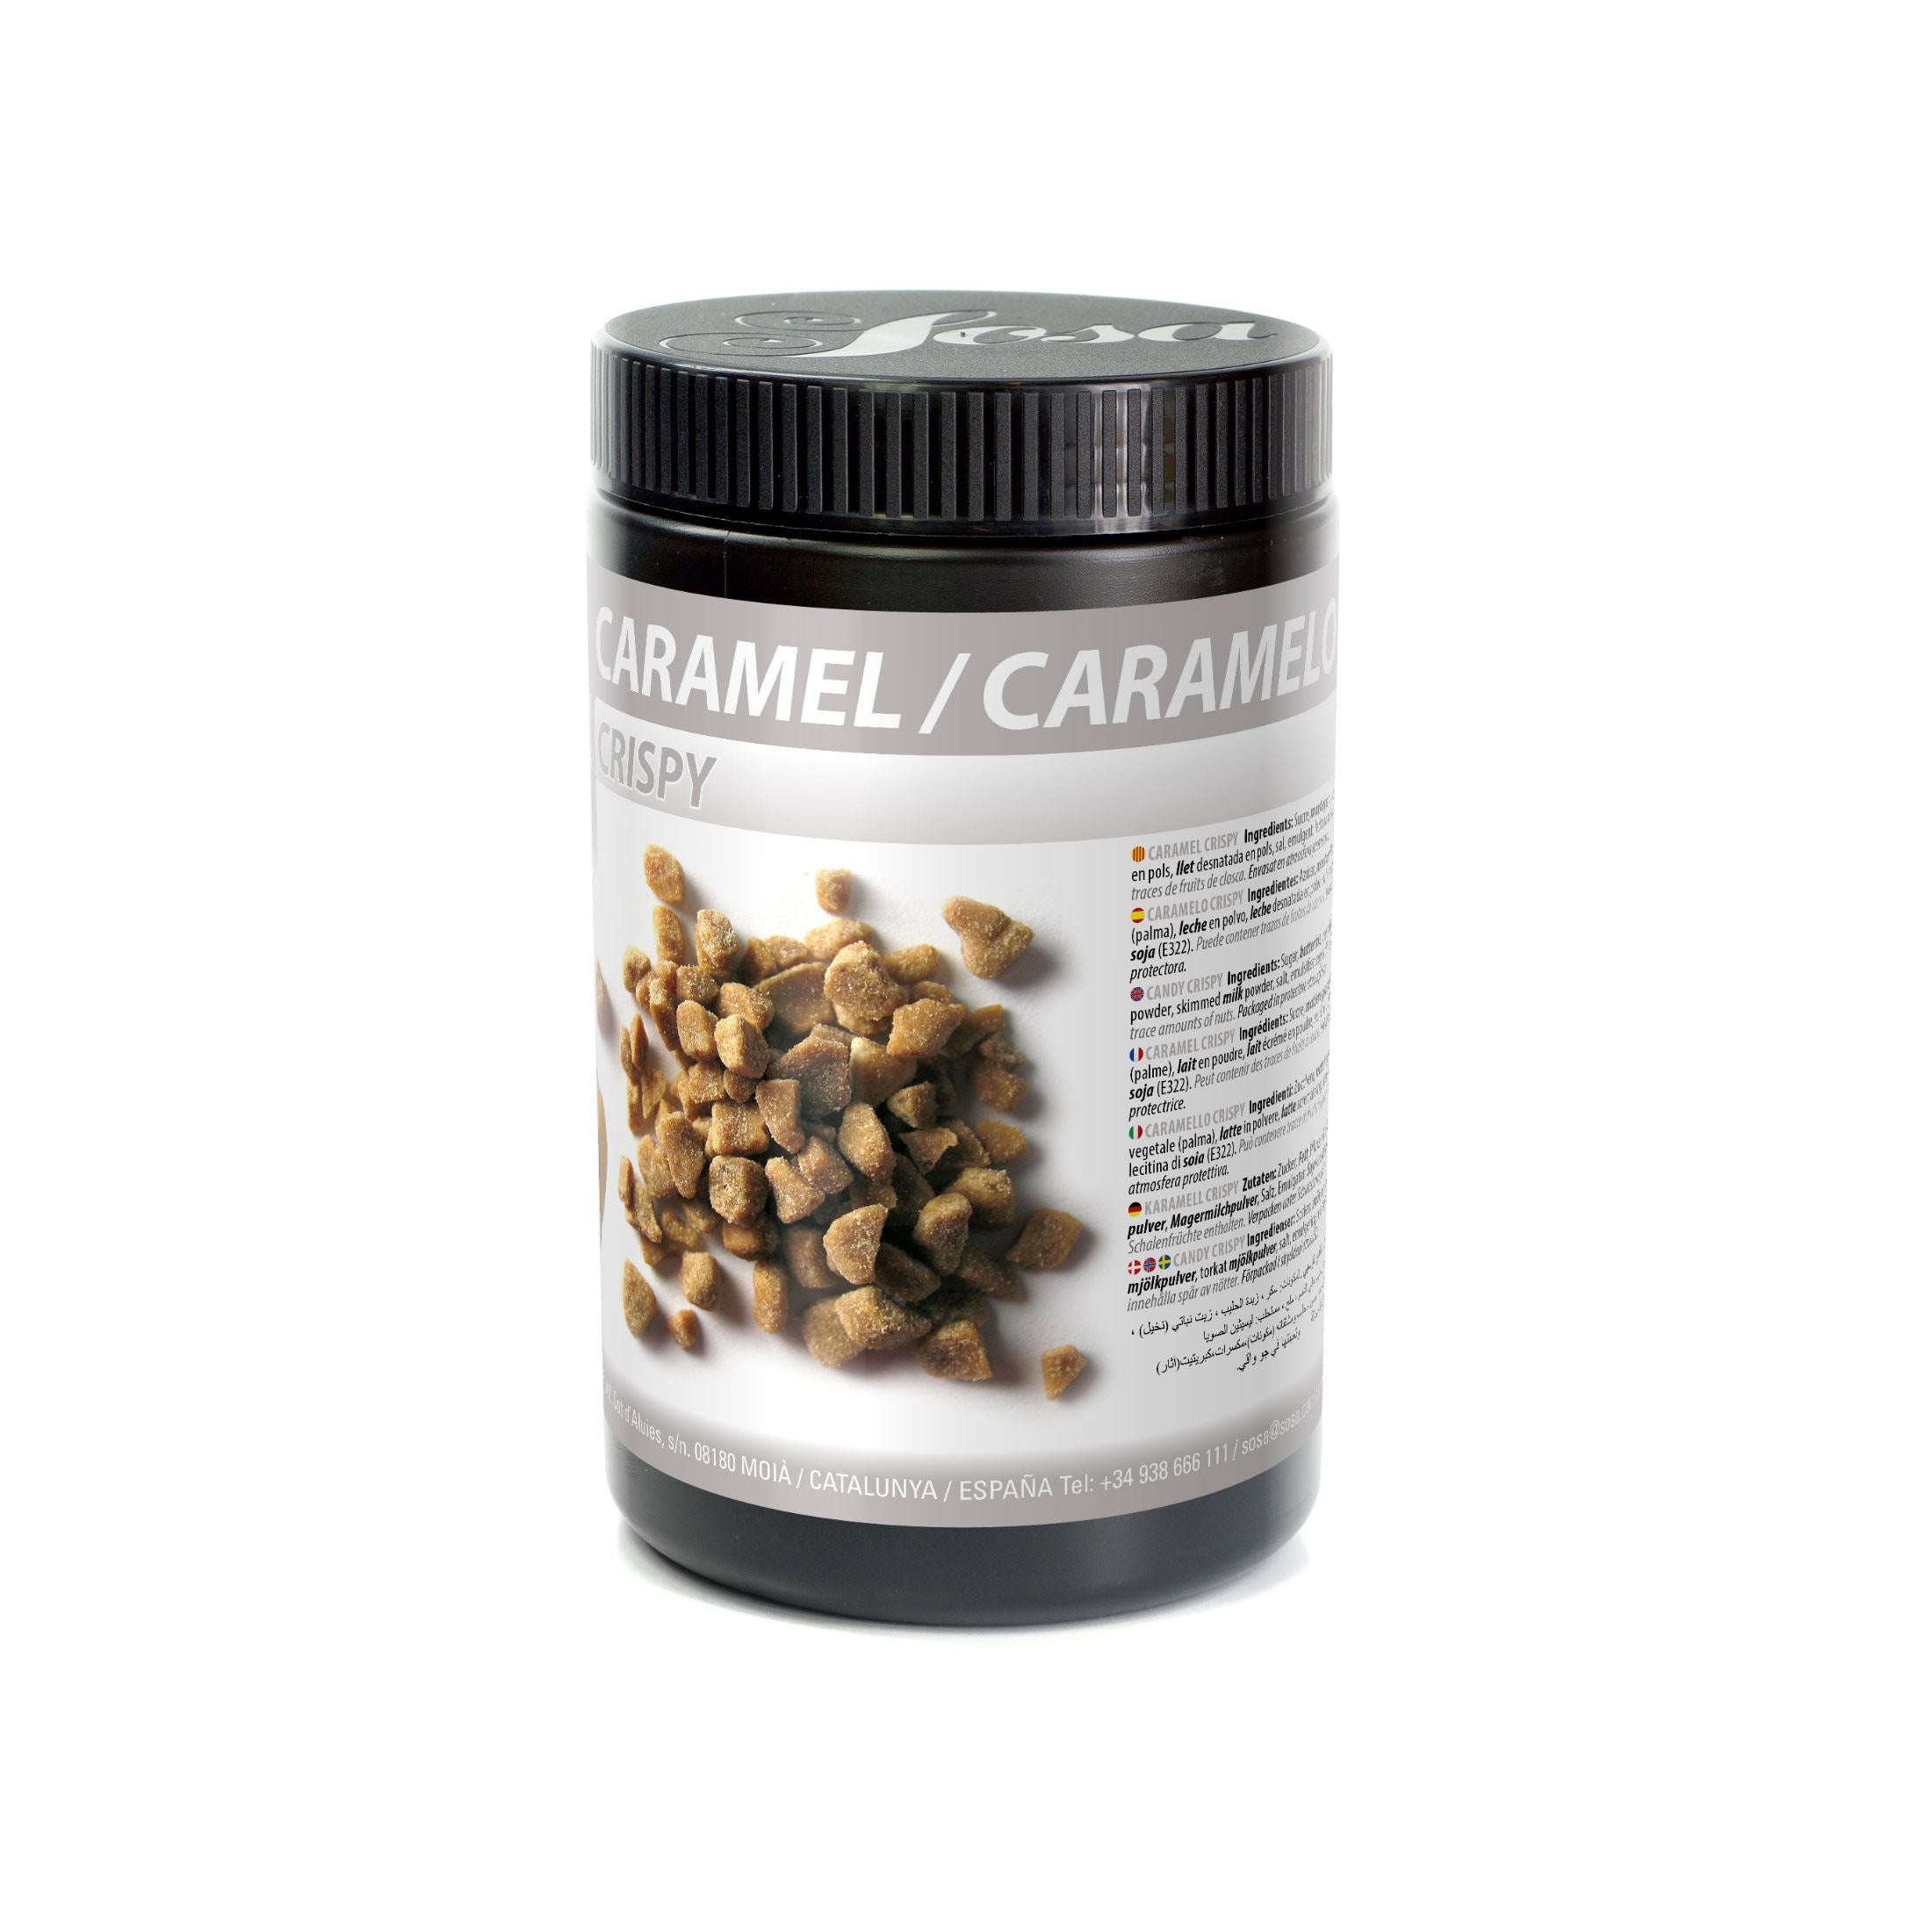 SOSA Freeze Dried Caramel Crispy, 750g